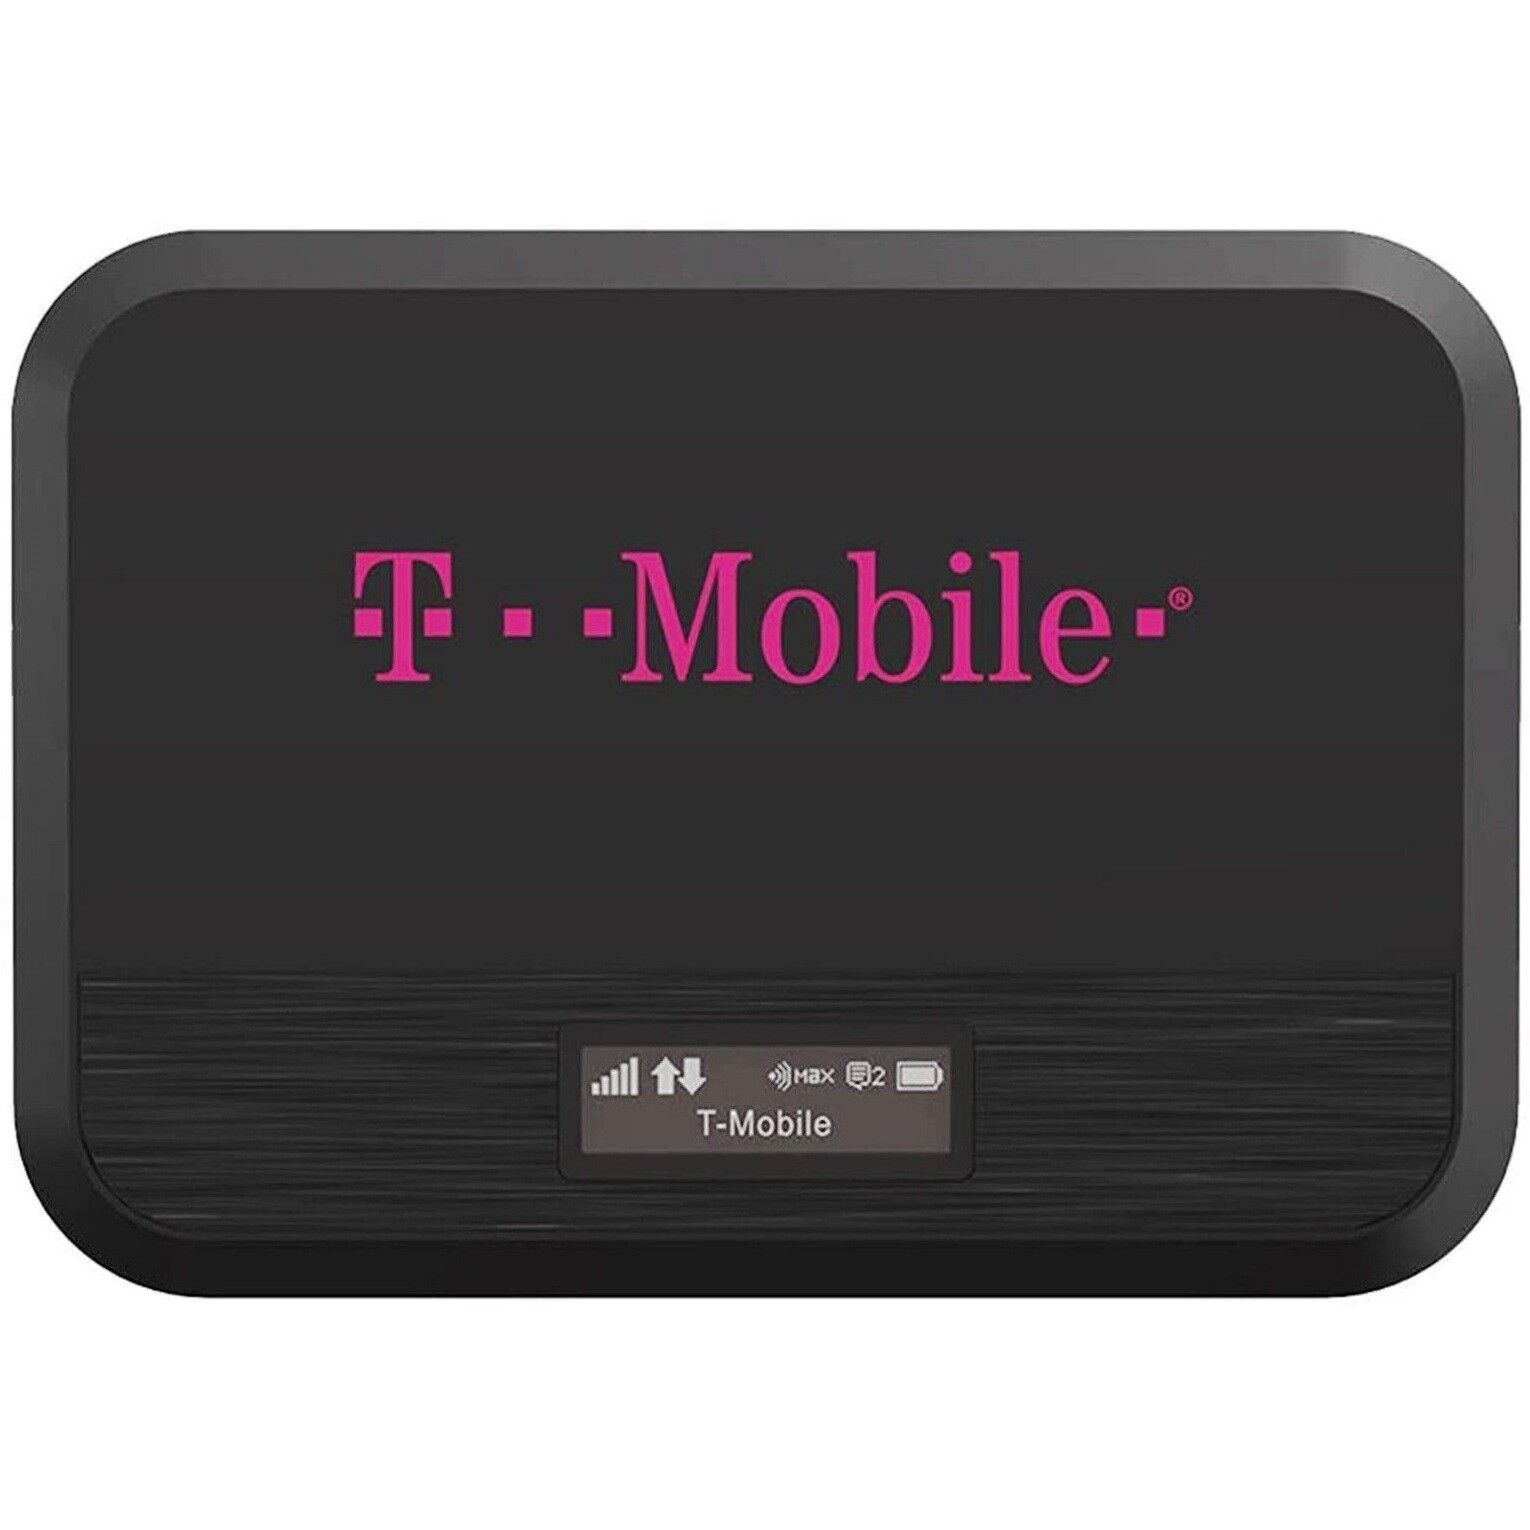 NEW Franklin T9 - RT717 - Black (T-Mobile) 4G LTE GSM Mobile WiFi Hotspot Modem